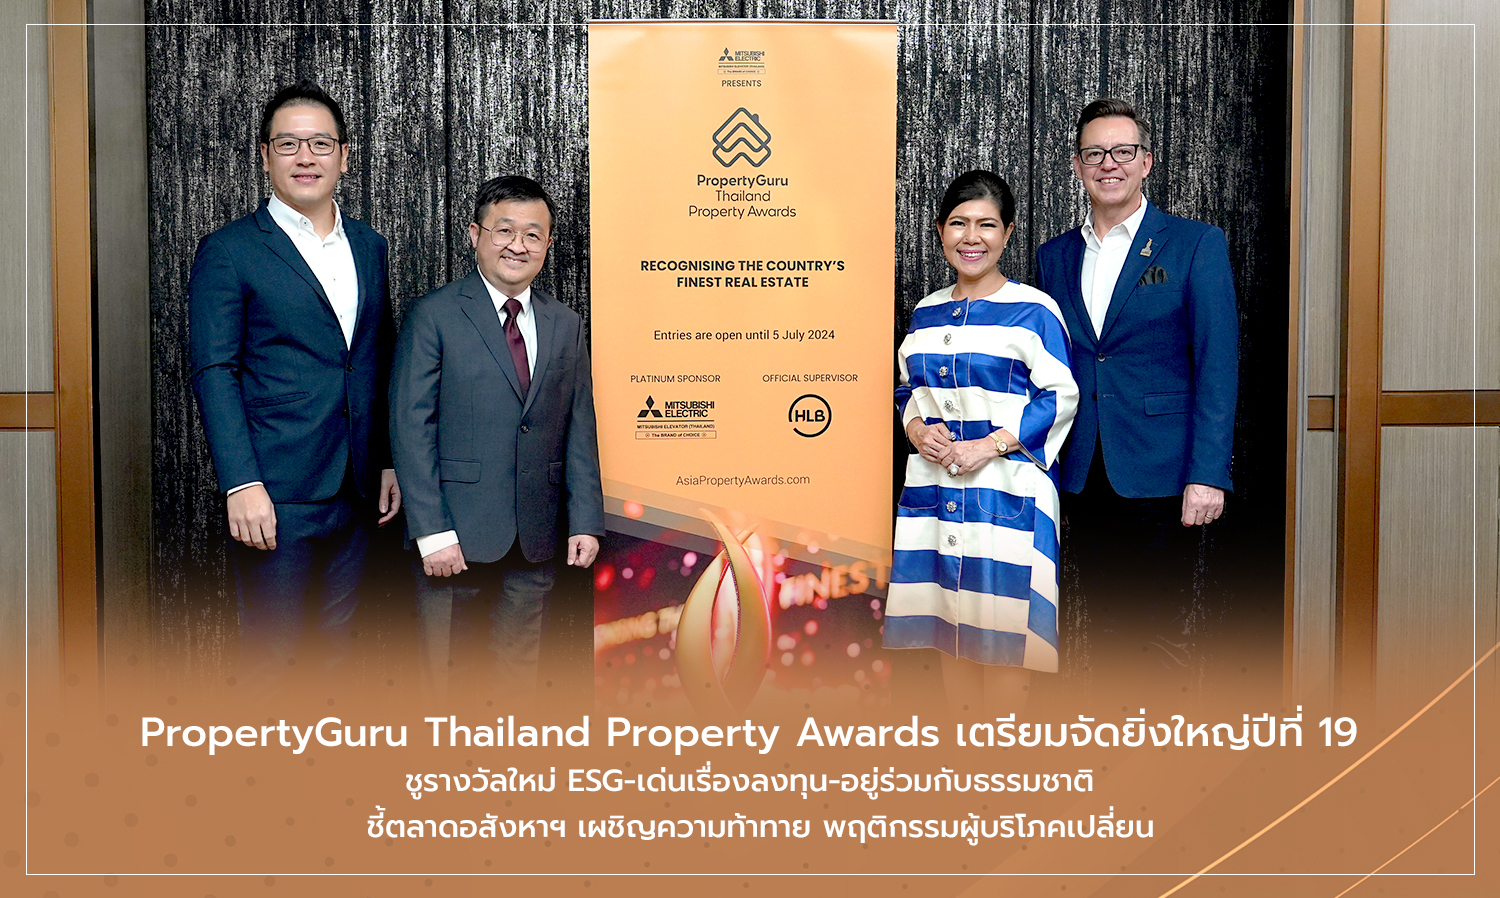 propertyguru-thailand-property-awards-เตรียมจัดยิ่งใหญ่ปีท-